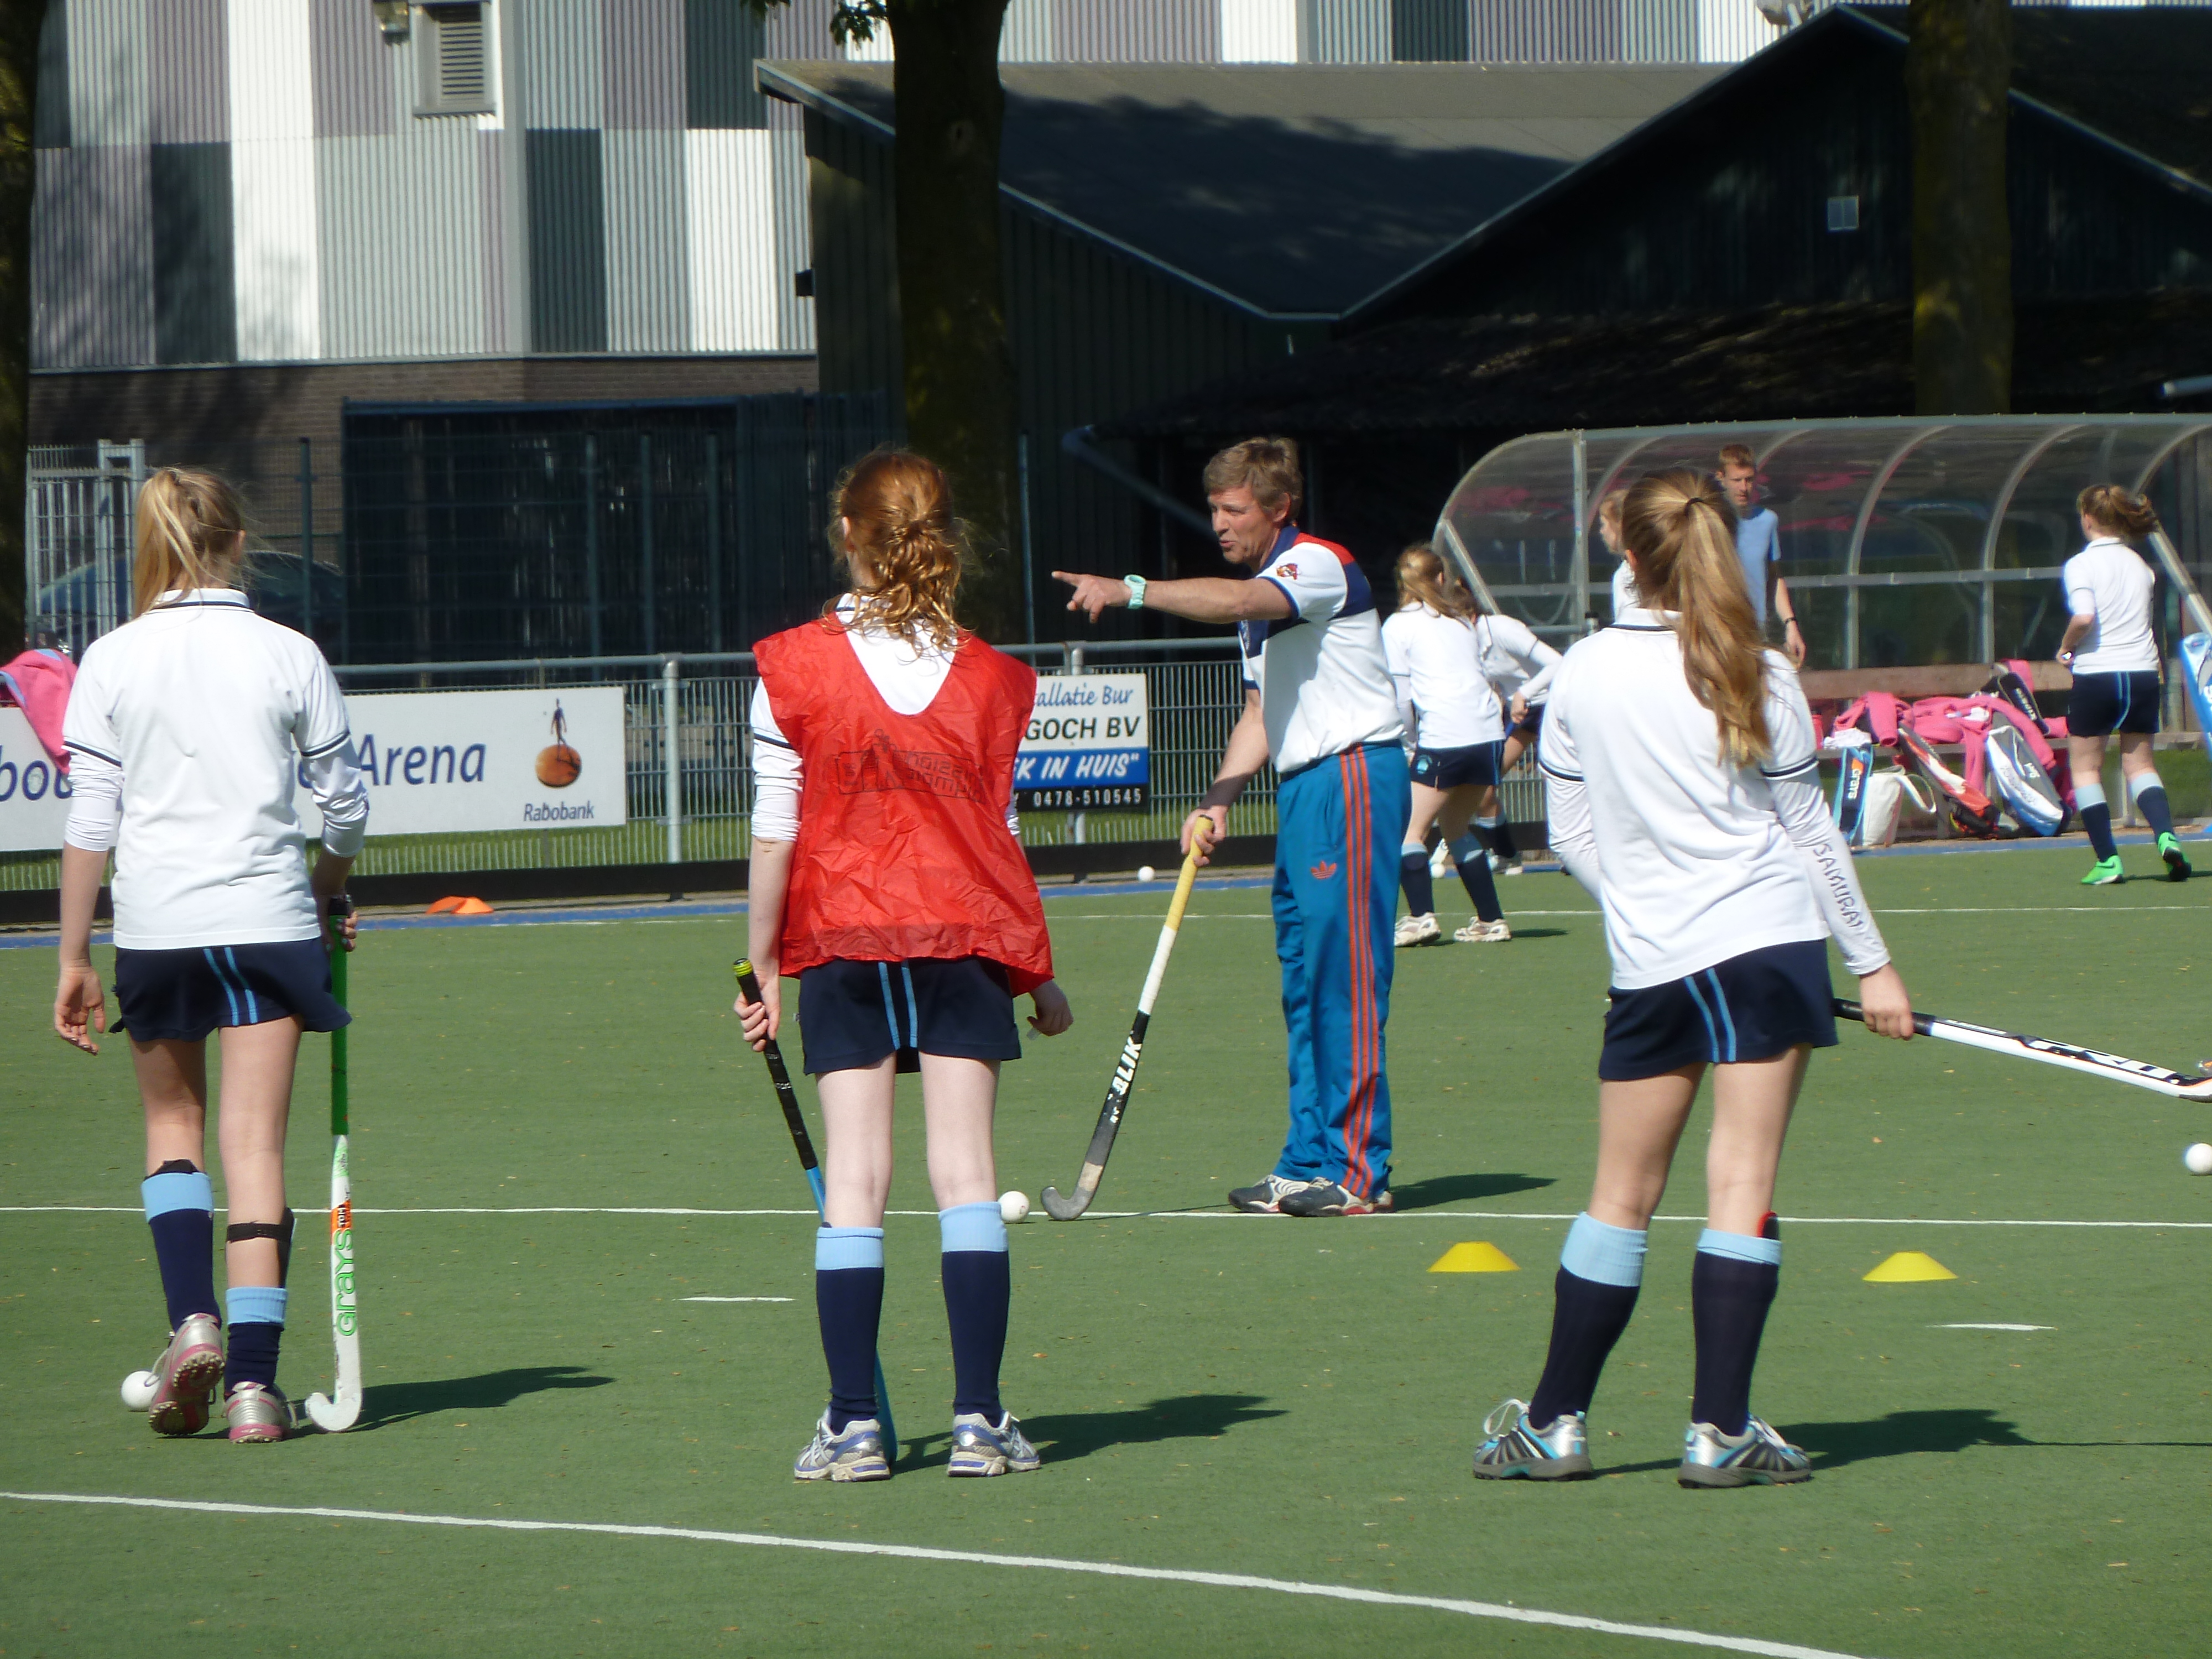 SportsSchool Holland Hockey 1.JPG